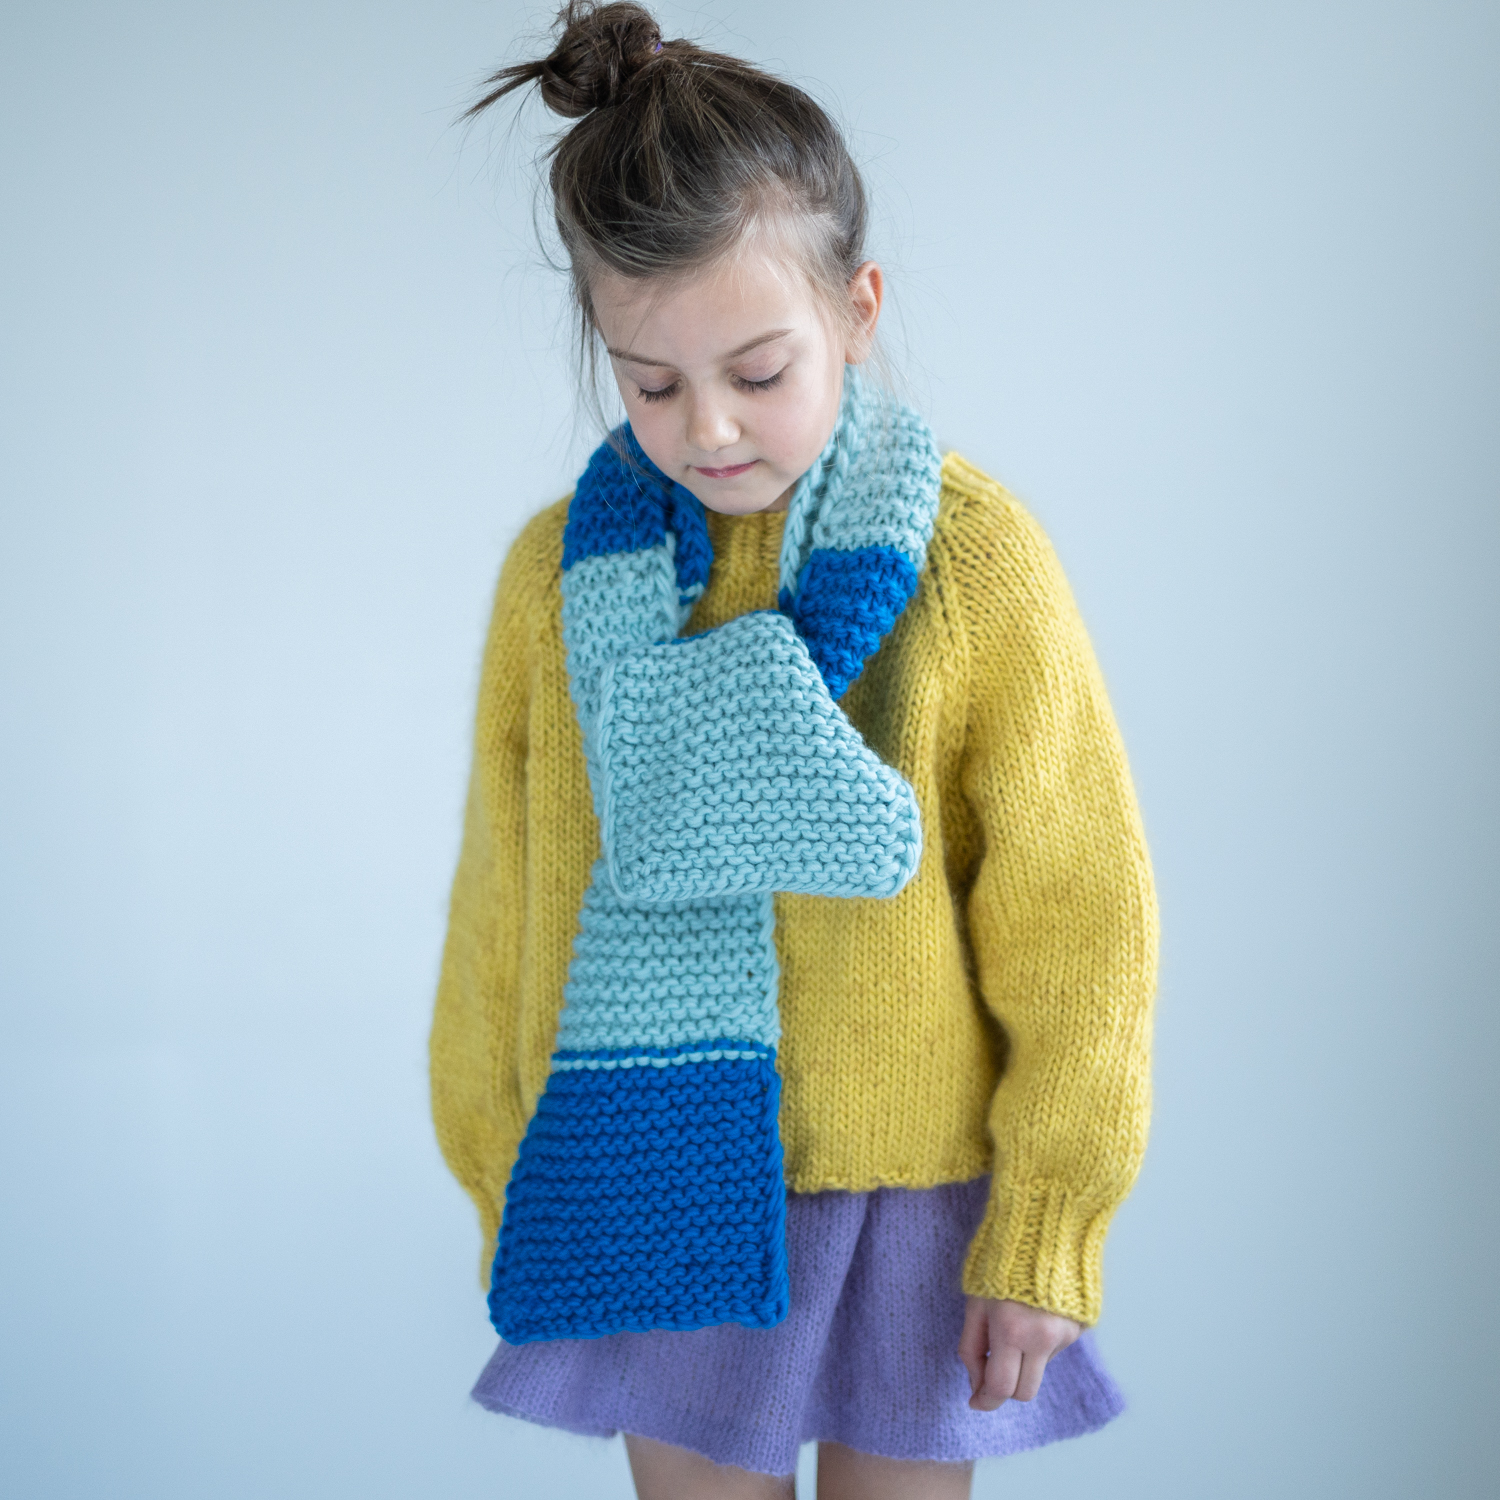 Scarf knitting pattern beginner - So Striped scarf | Beginners knit striped scarf knitting kit - by HipKnitShop - 05/12/2018